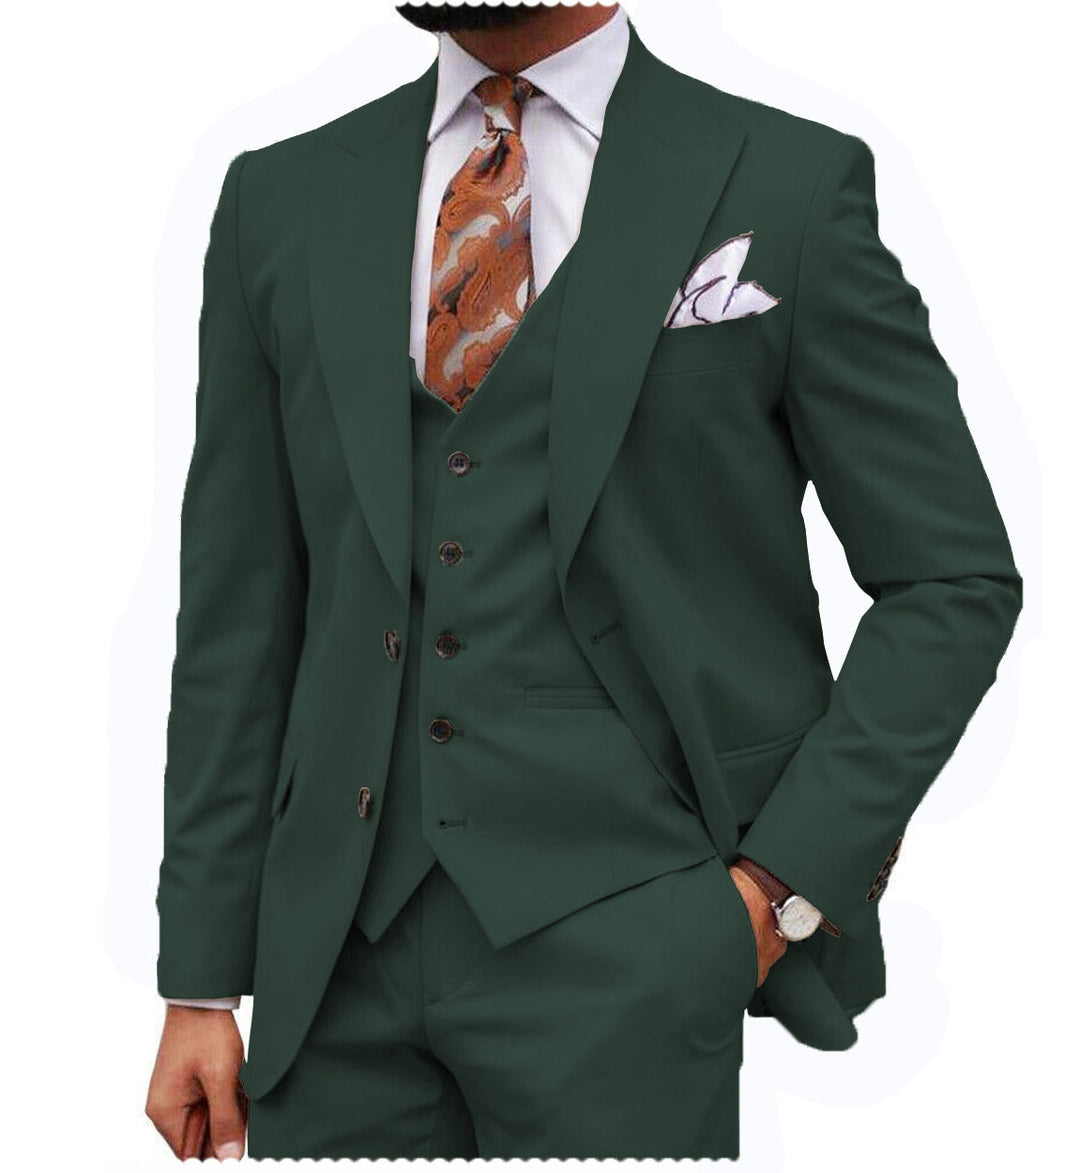 Formal Men's 3-Piece Regular Fit Peak Lapel Flat Men's Wedding Suit (Blazer + Vest + Pants) mens event wear